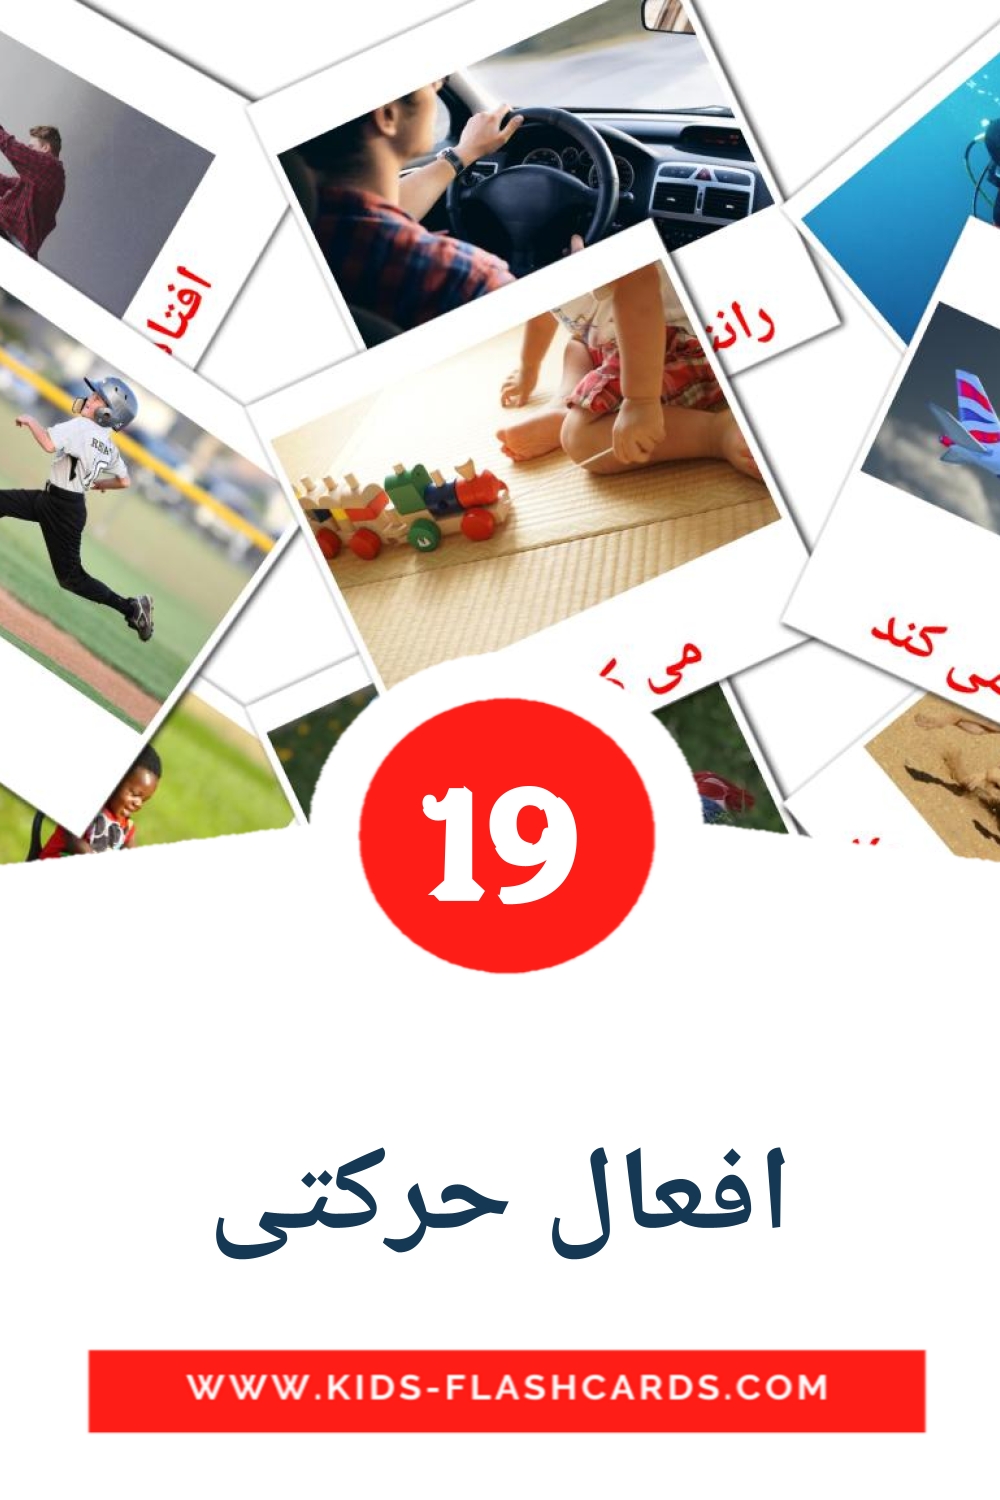 19 افعال حرکتی Picture Cards for Kindergarden in persian